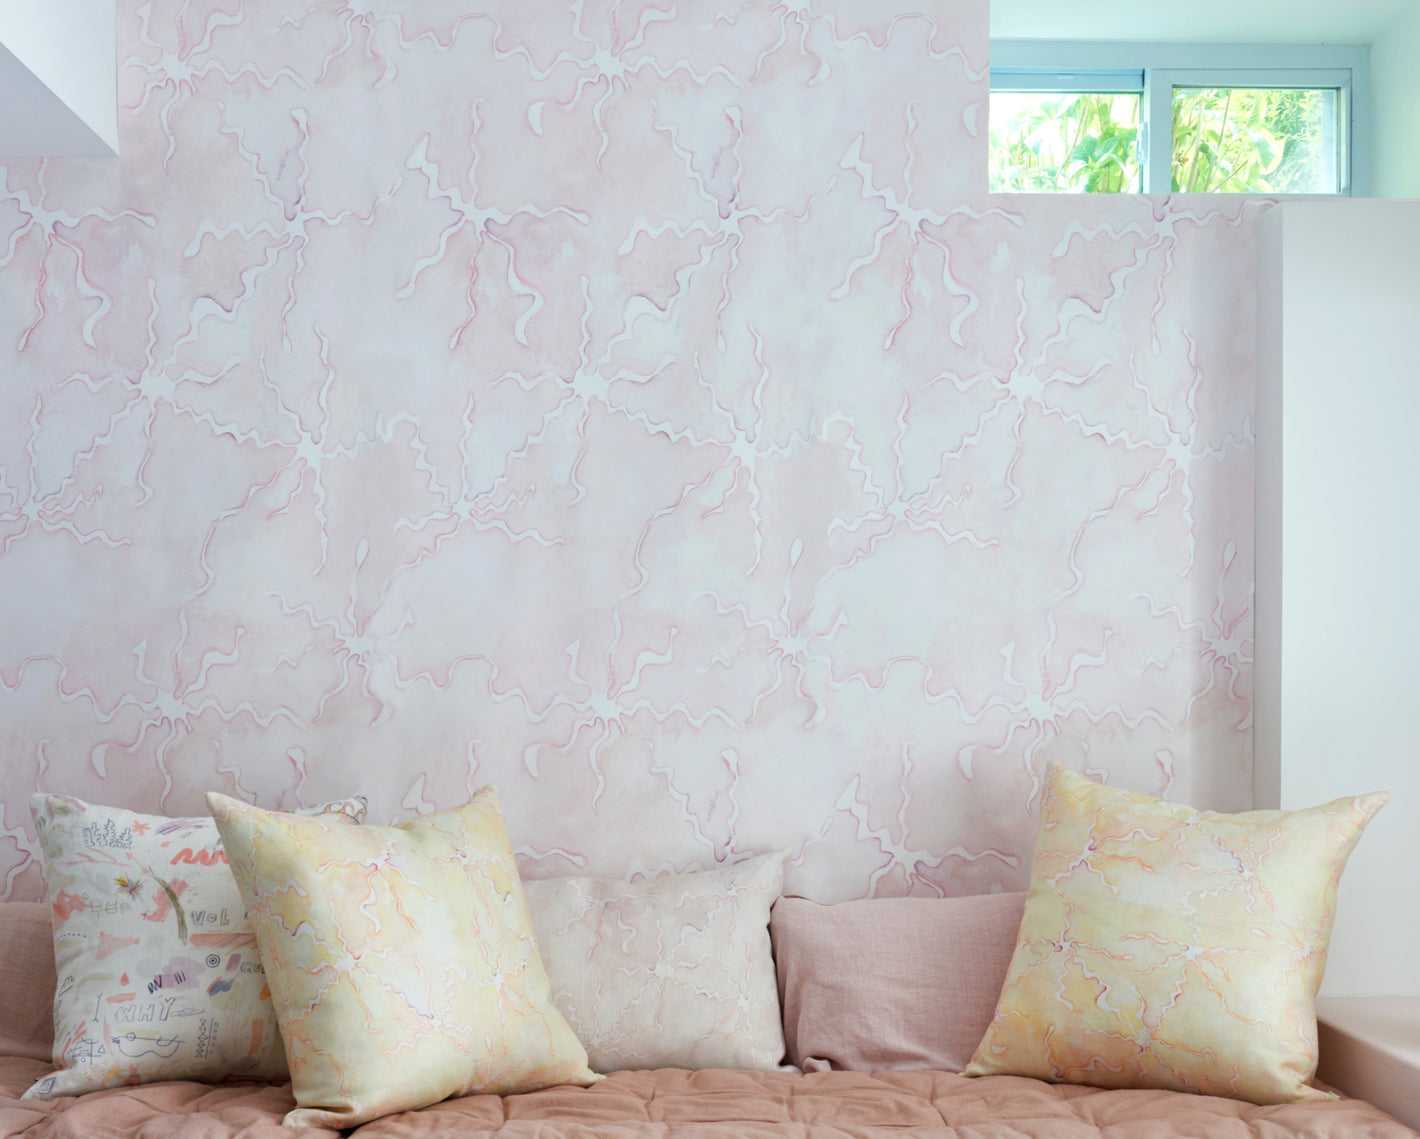 Pink marble wallpaper adorns the walls of a living room